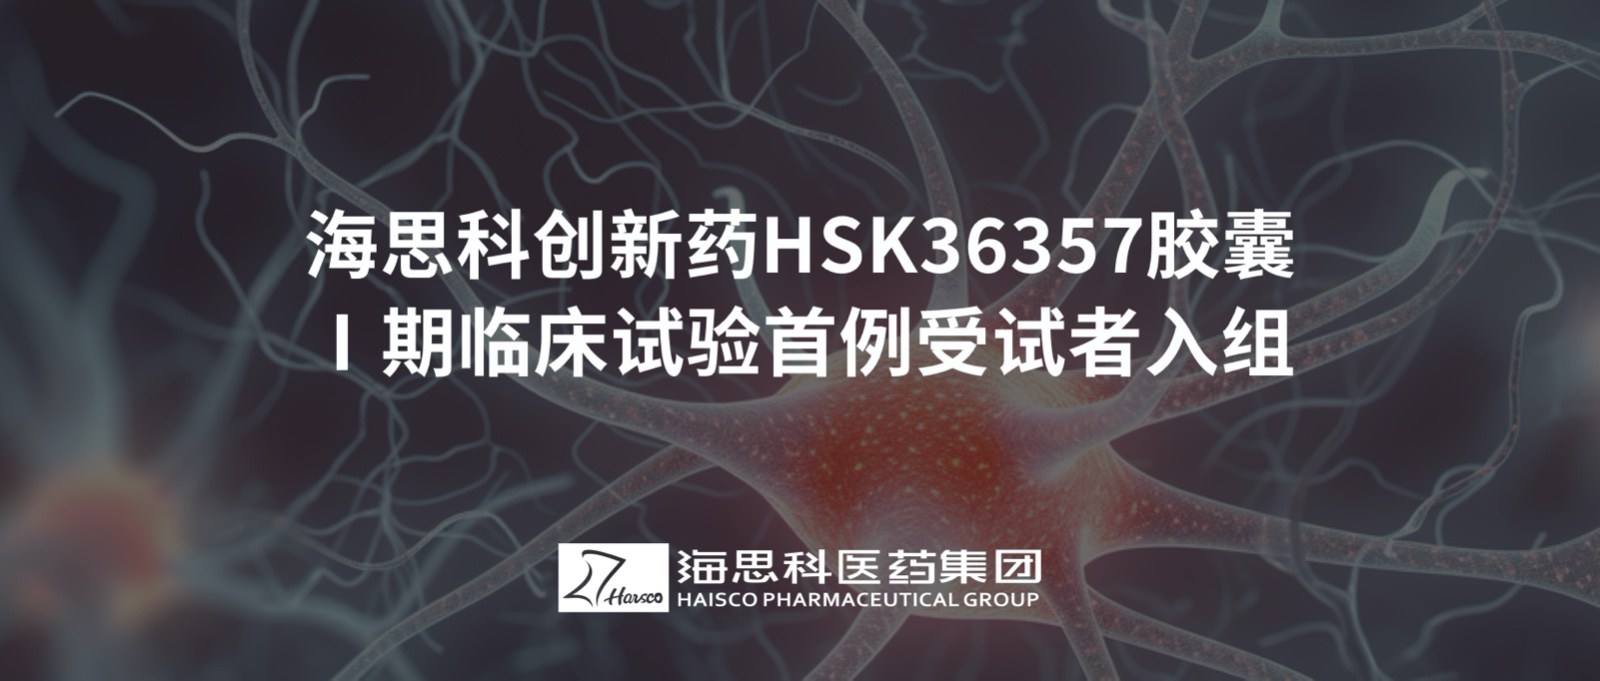 B体育创新药HSK36357胶囊Ⅰ期临床试验首例受试者入组